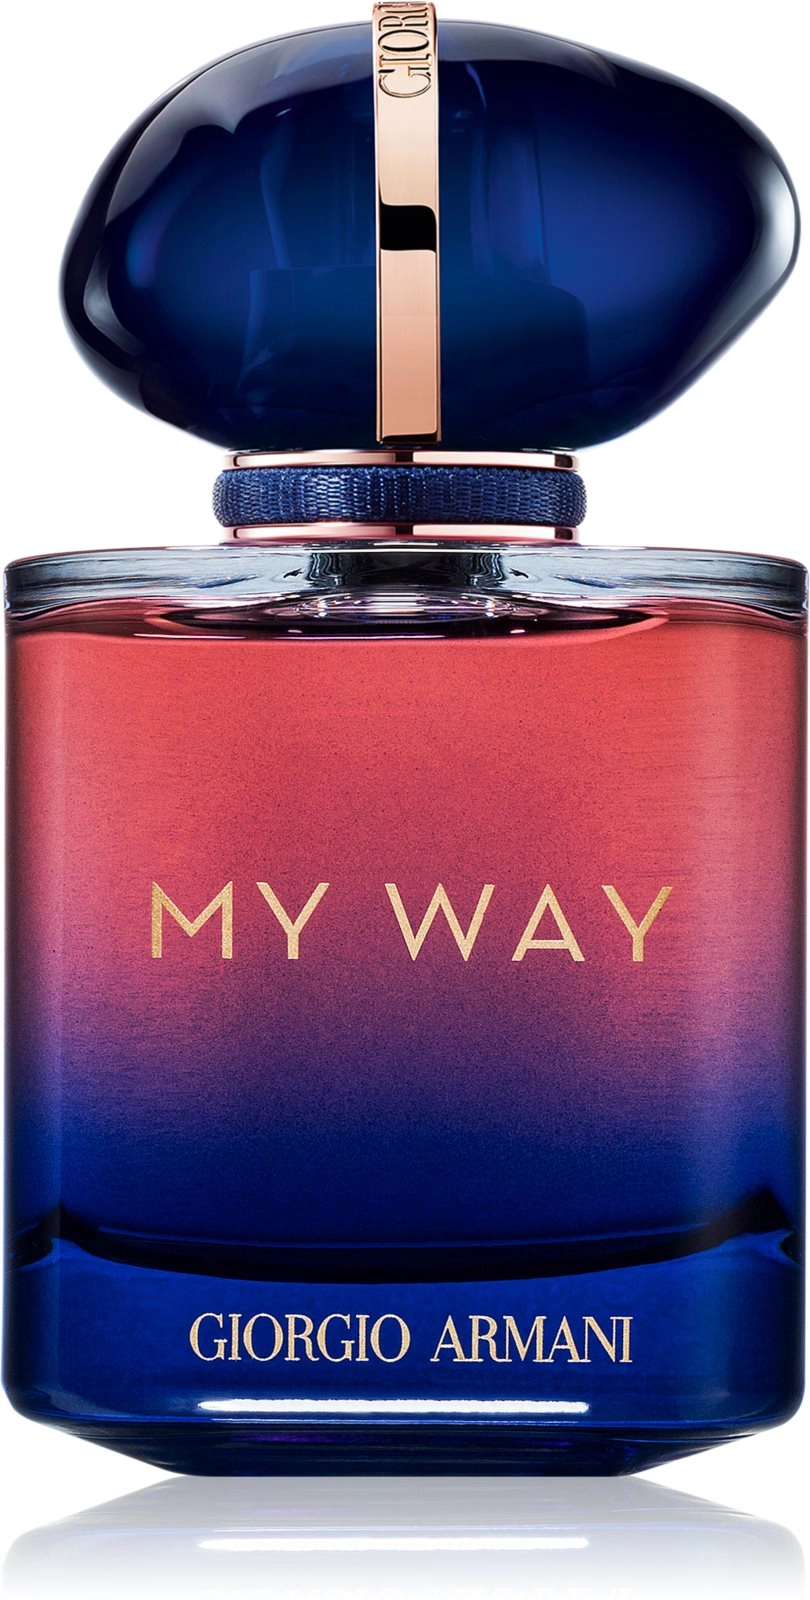 Армани му Вэй духи. Духи Giorgio Armani my way le Parfum женские. Way way Parfum. Runway Parfum. Духи армани май вэй